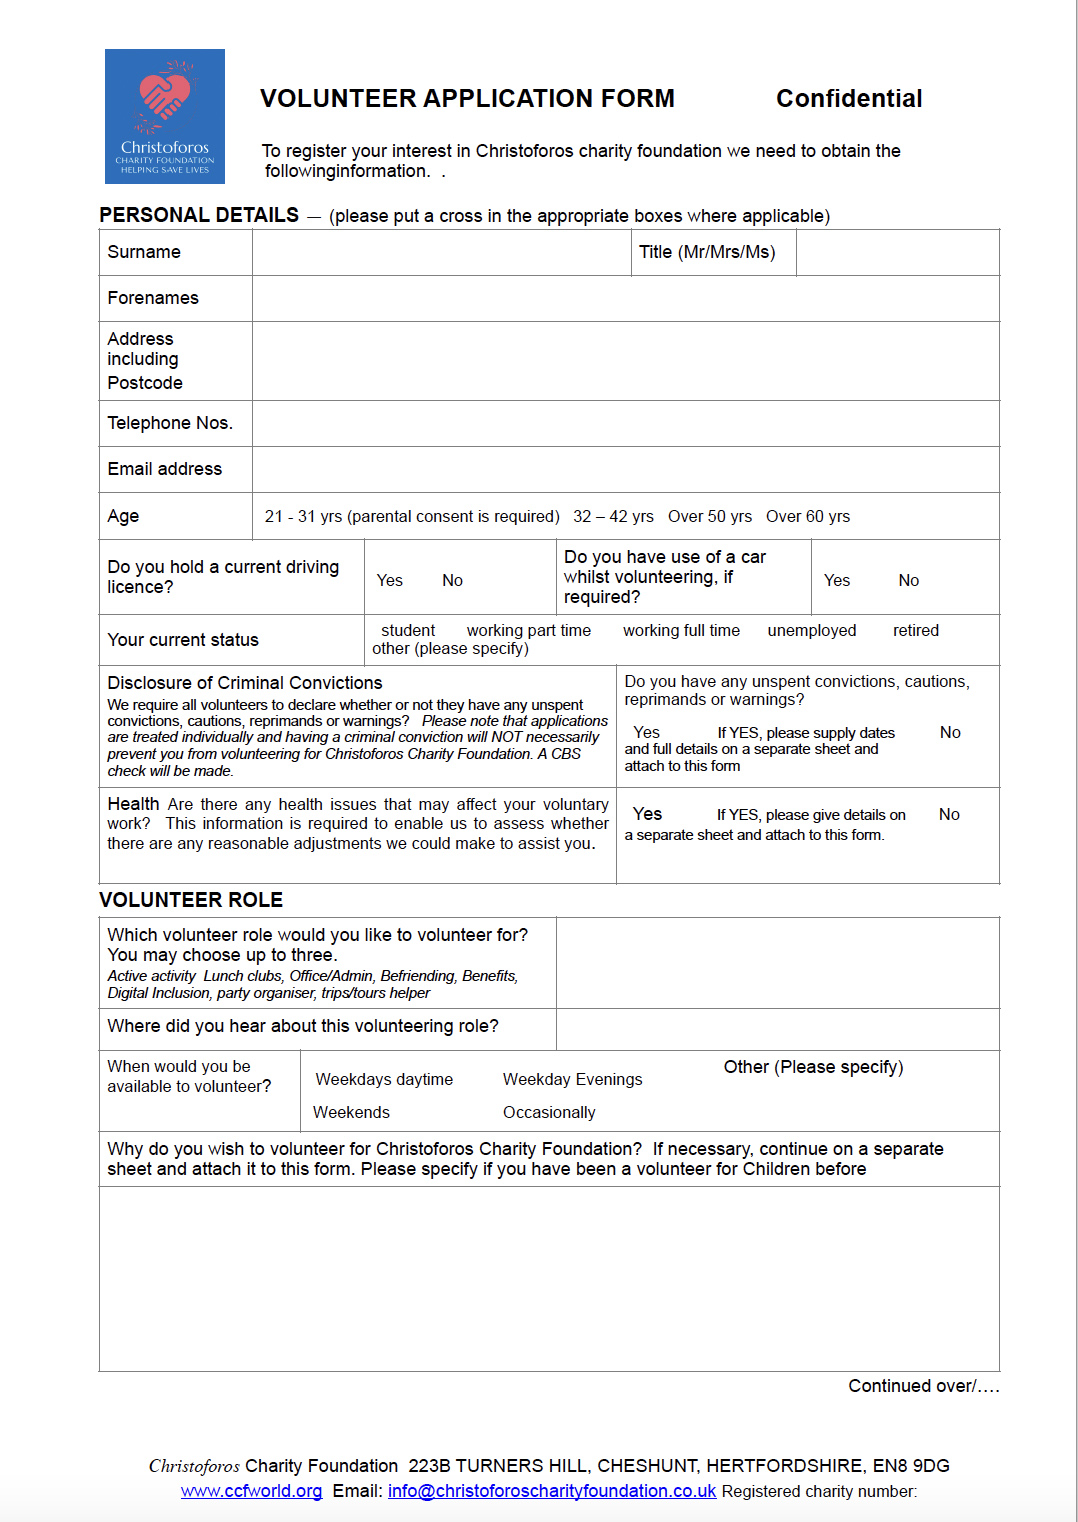 CCF Volunteer Application Form